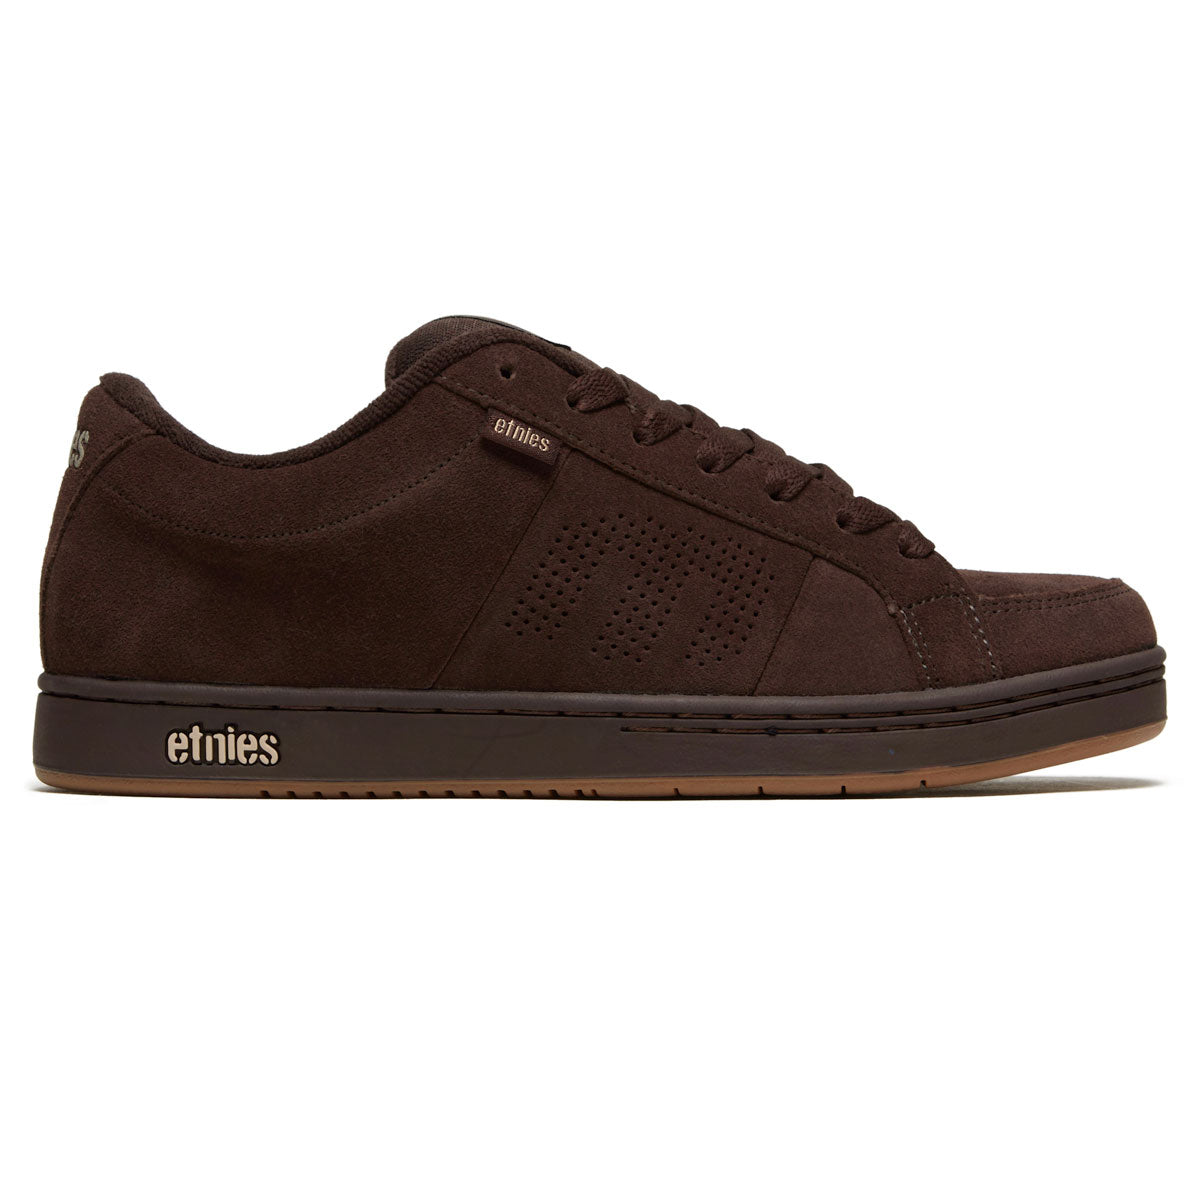 Etnies Kingpin Shoes - Brown/Black/Tan